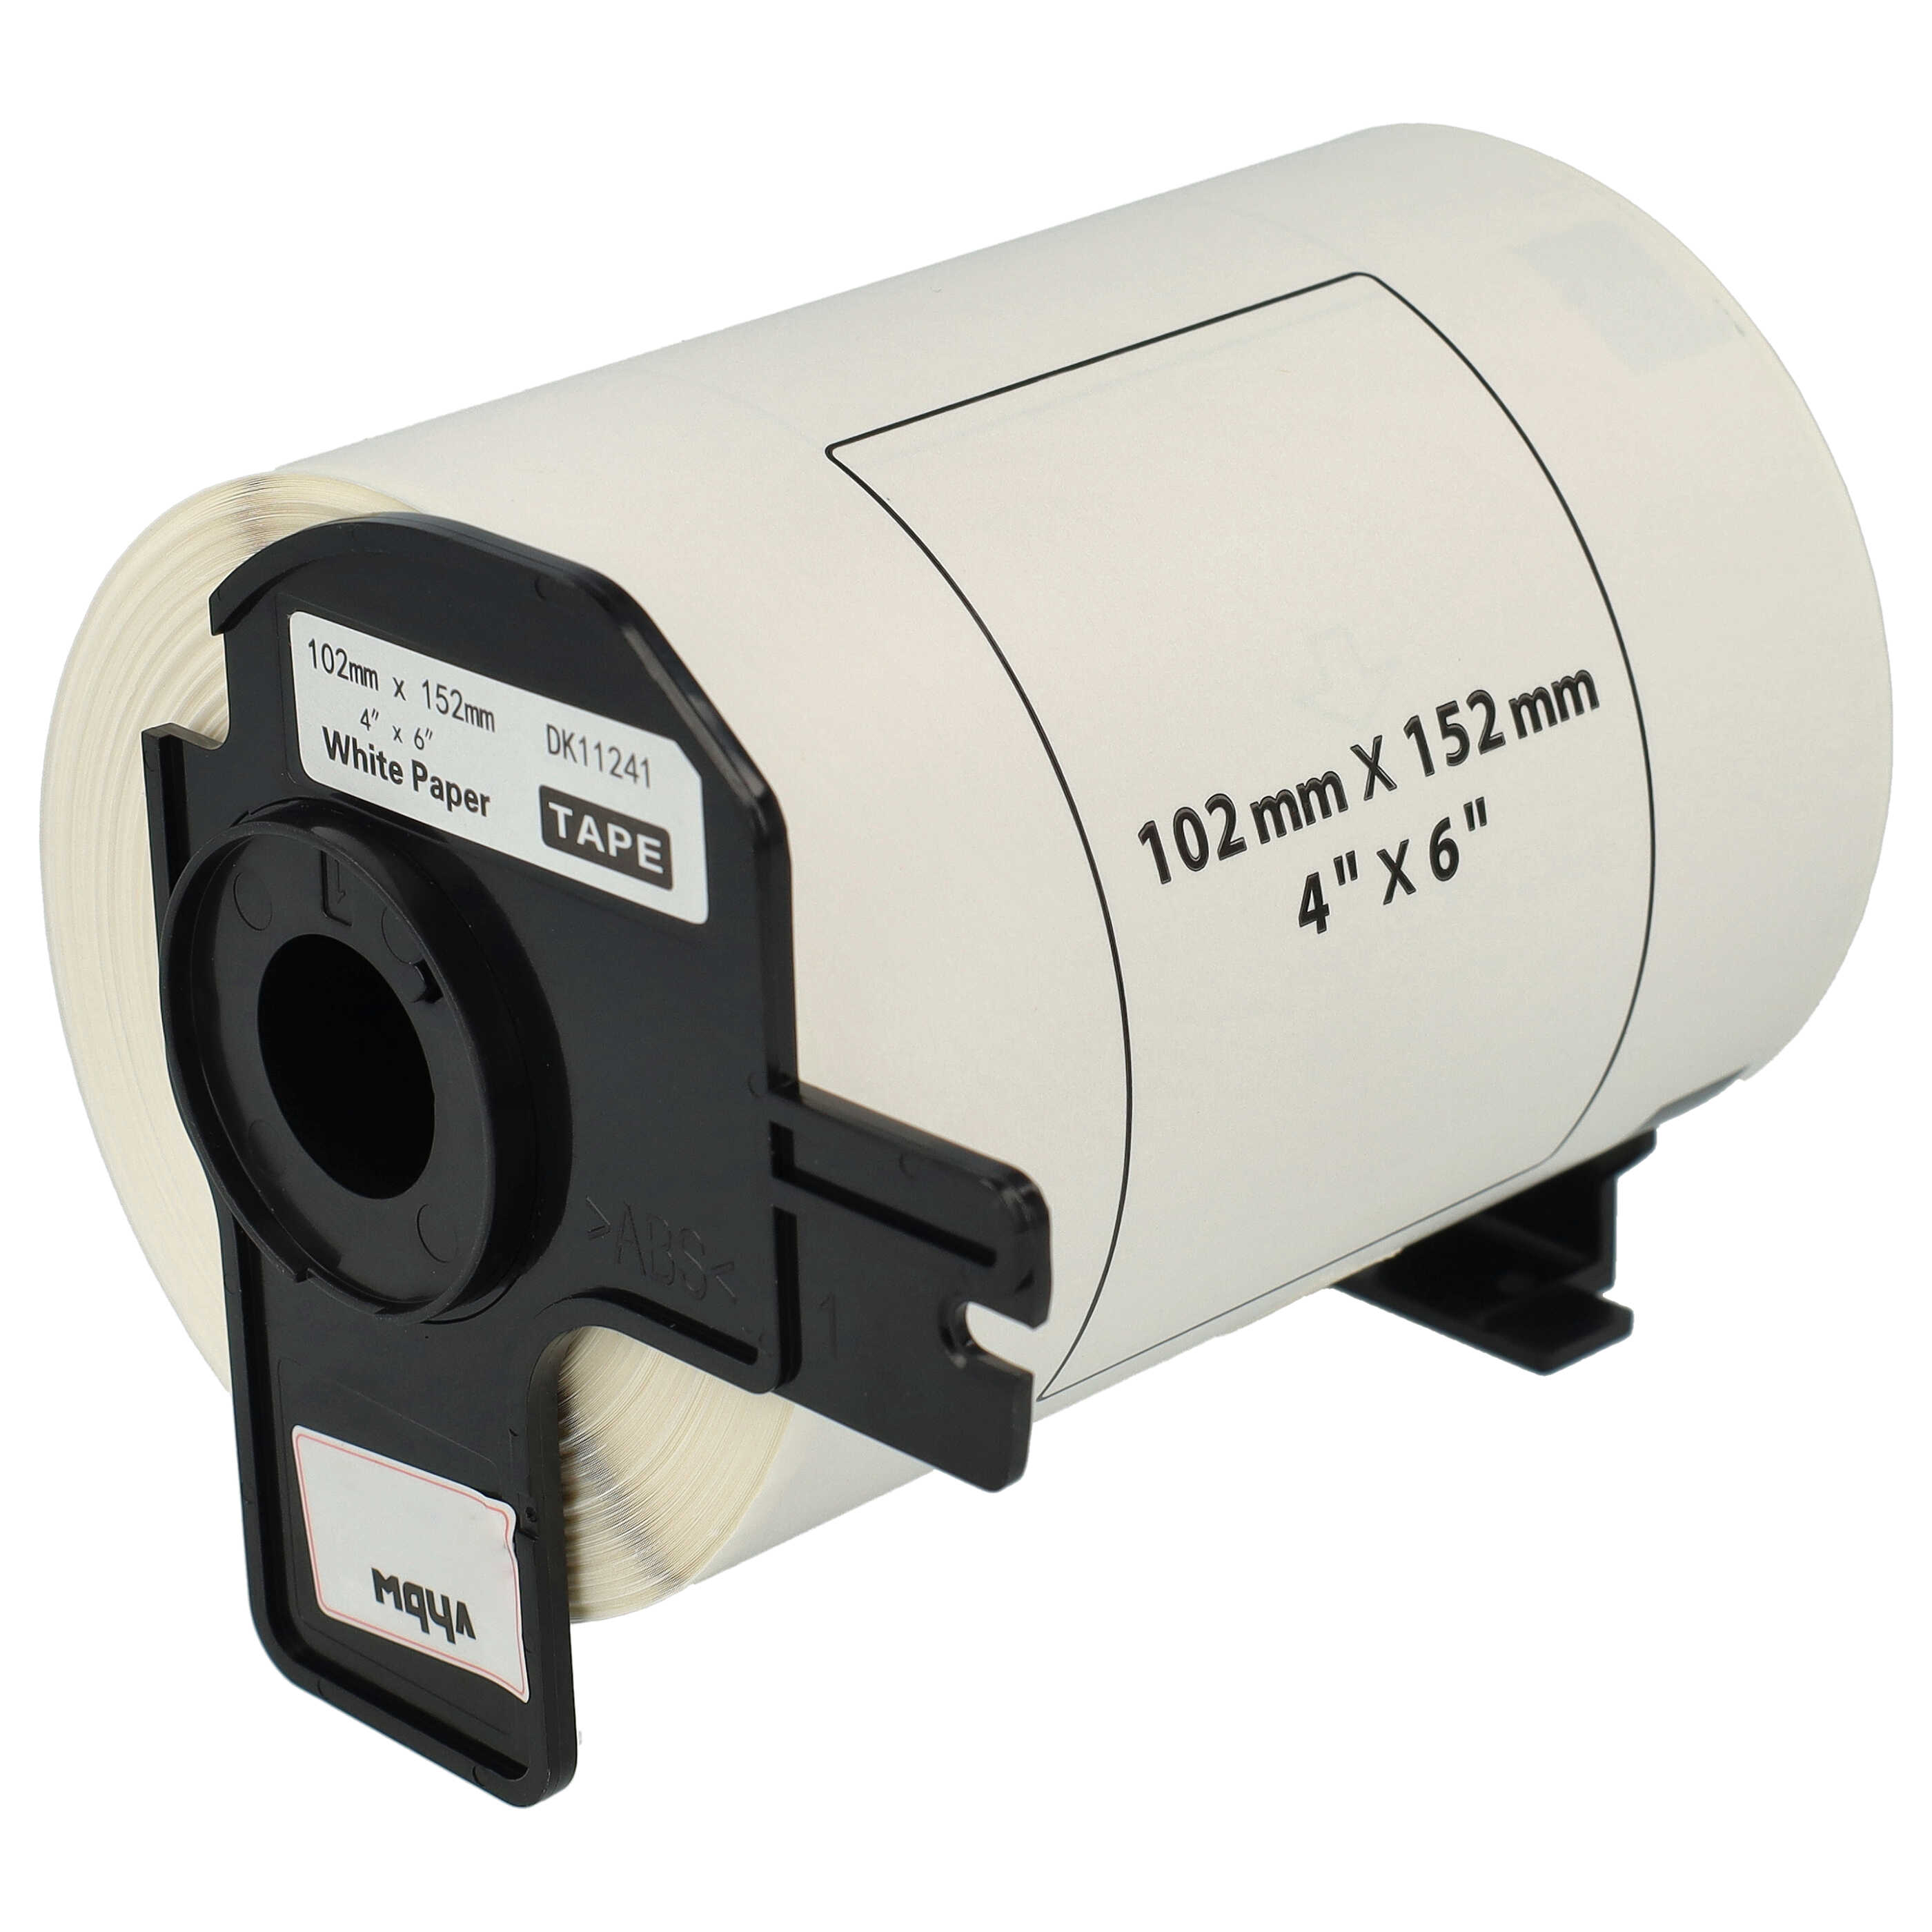 Etiquetas reemplaza Brother DK-11241 para impresora etiquetas - Estándar 102 mm x 152 mm + soporte